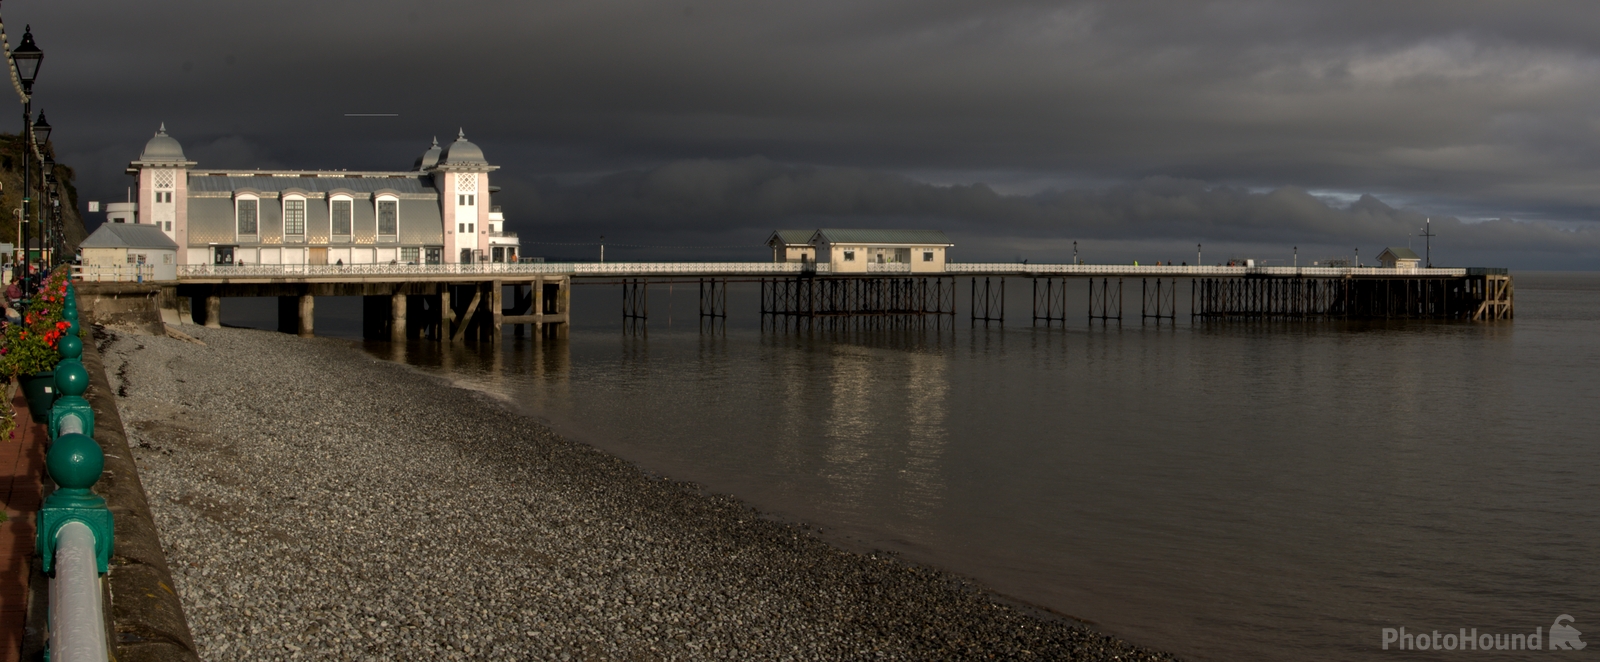 Image of Penarth Pier by Steve Lang